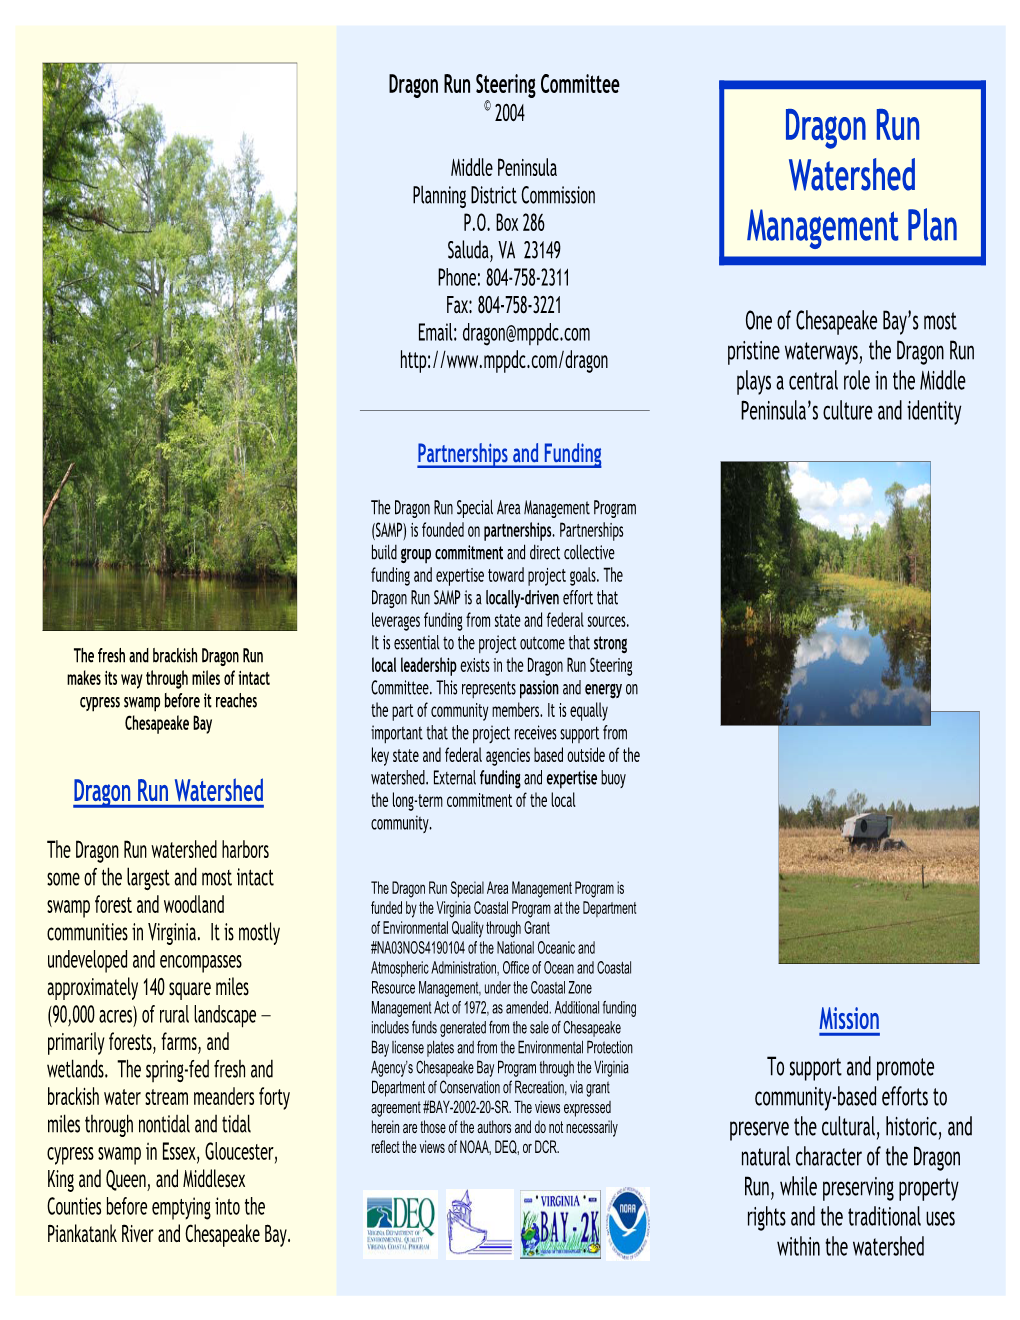 Dragon Run Watershed Management Plan Brochure